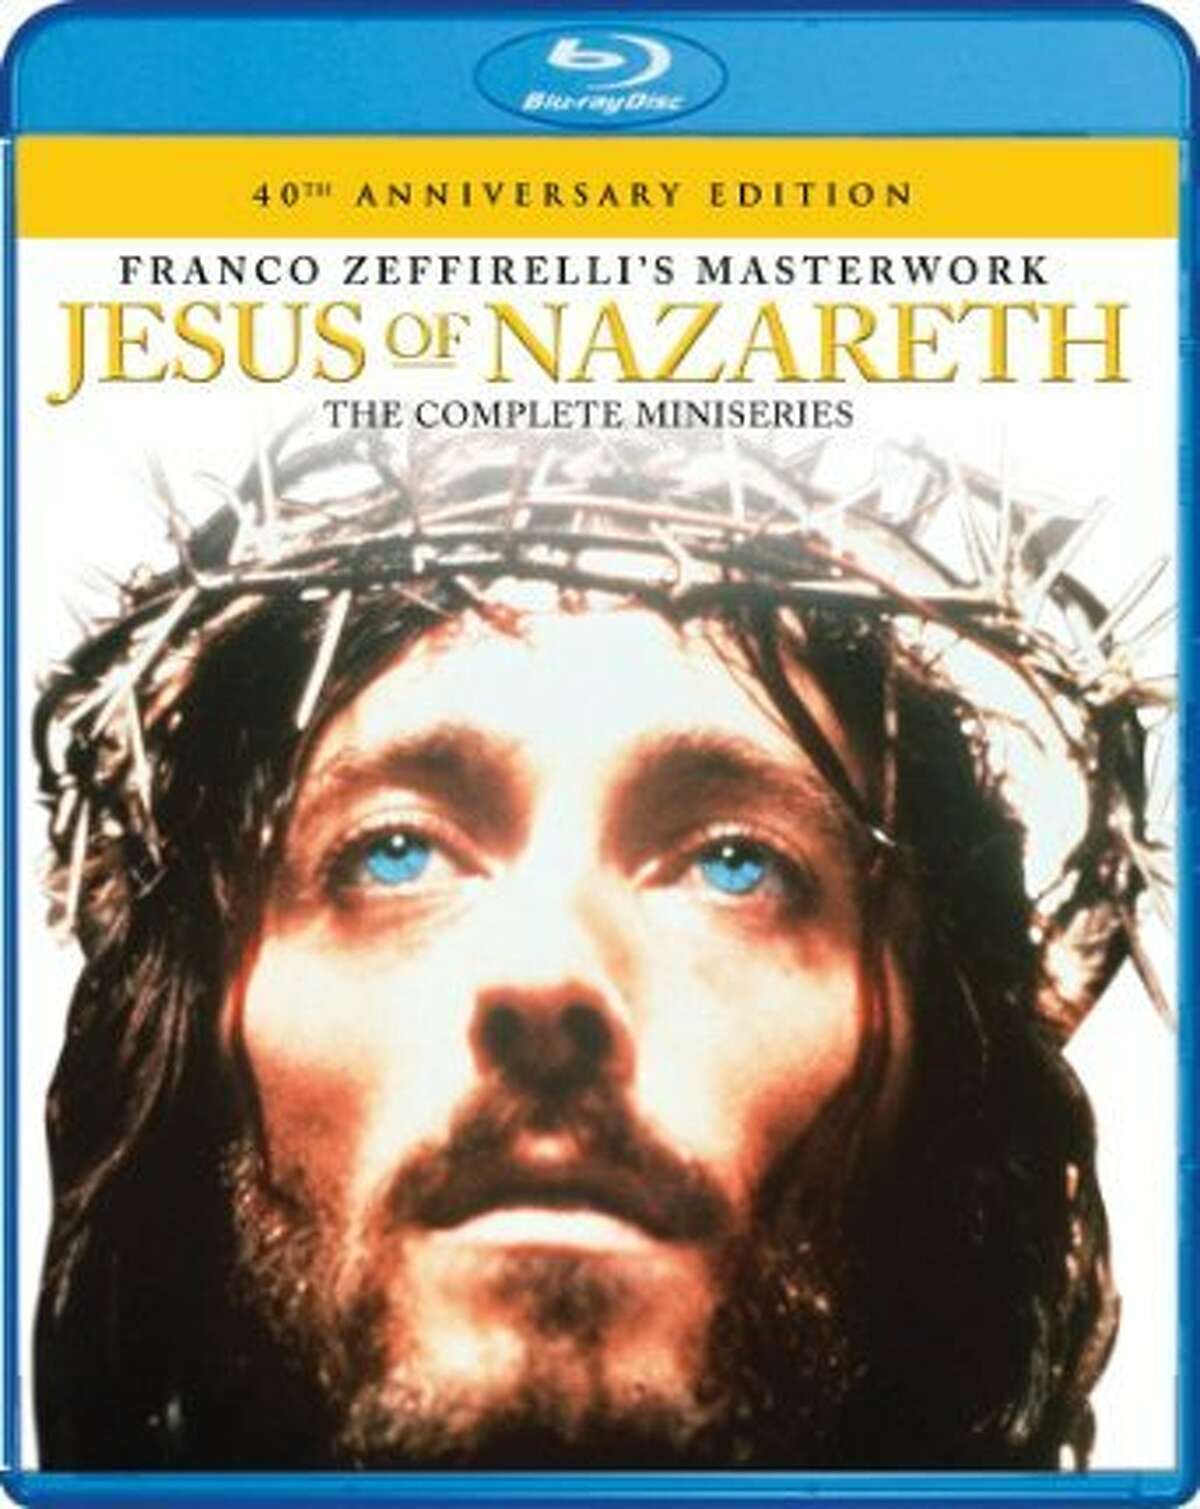 Blu-ray cover: "Jesus of Nazareth"